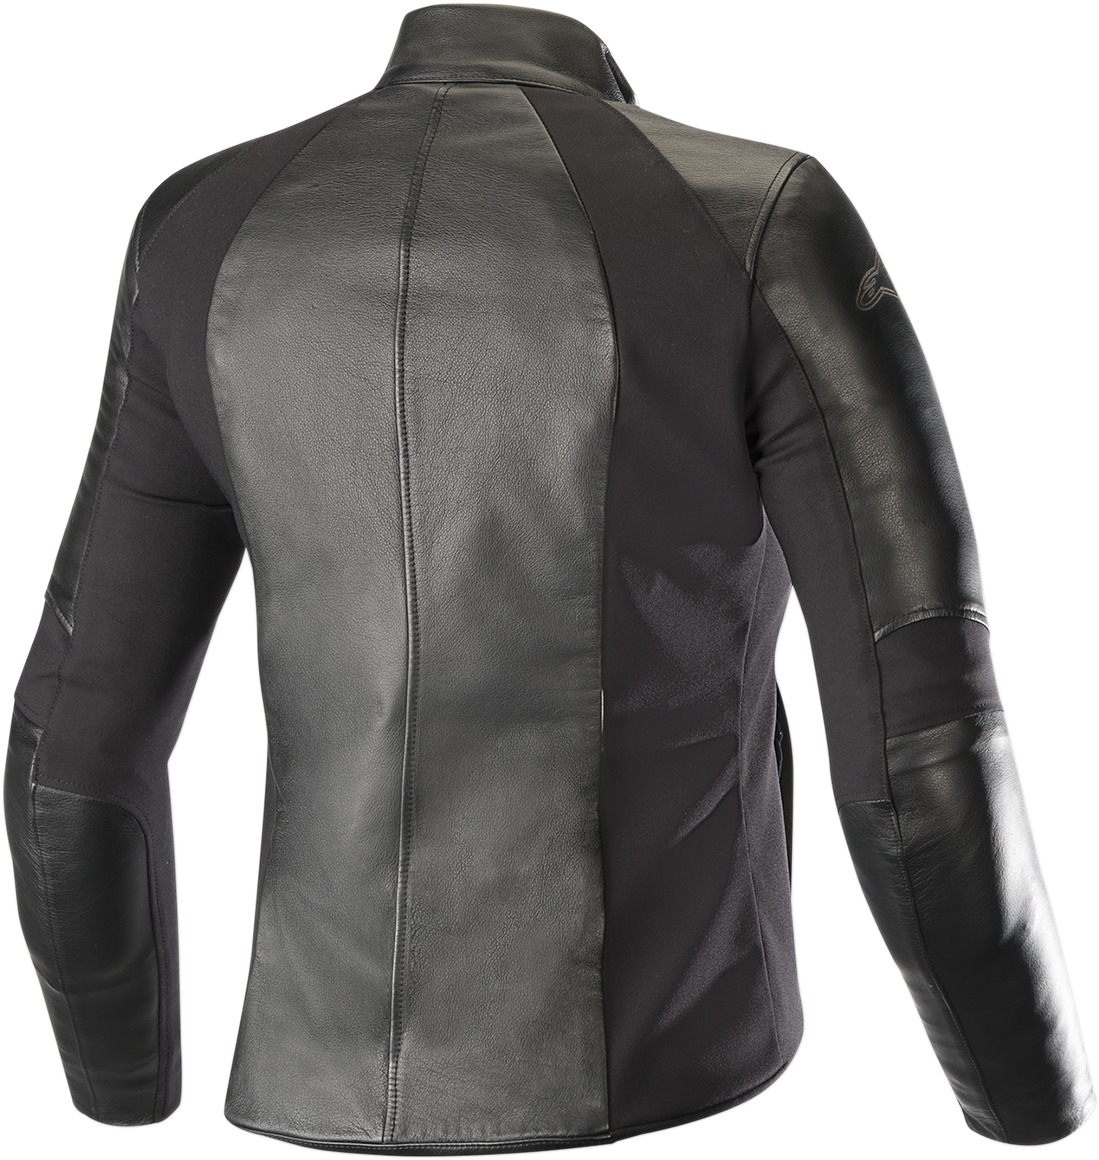 Women's Vika V2 Leather Street Riding Jacket Black US 3X-Large - Click Image to Close